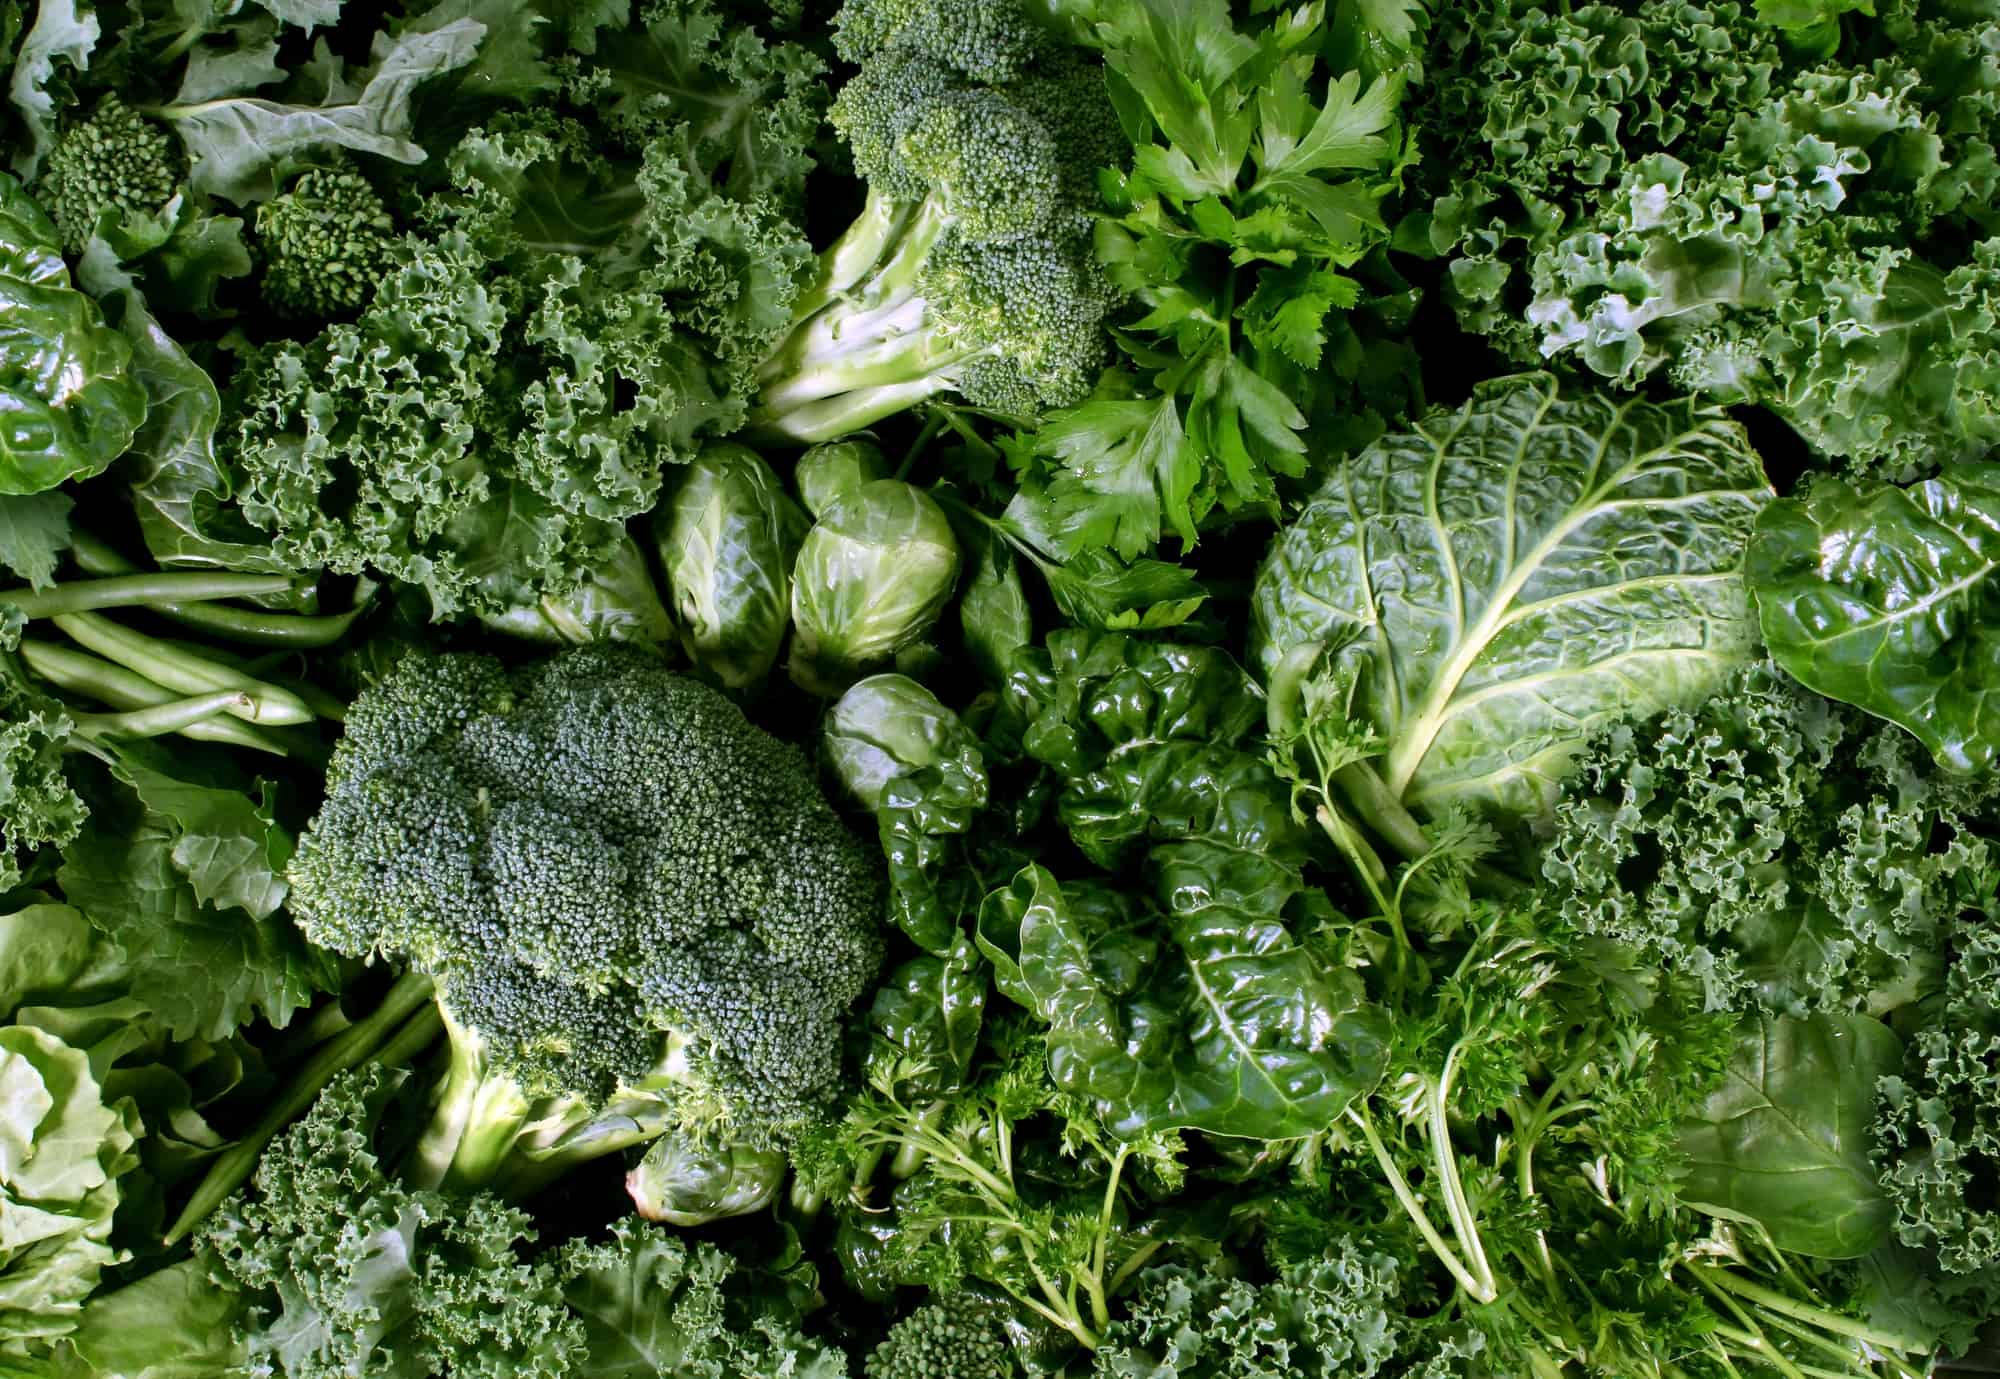 Health Benefits Of Eating Dark Green Leafy Vegetables